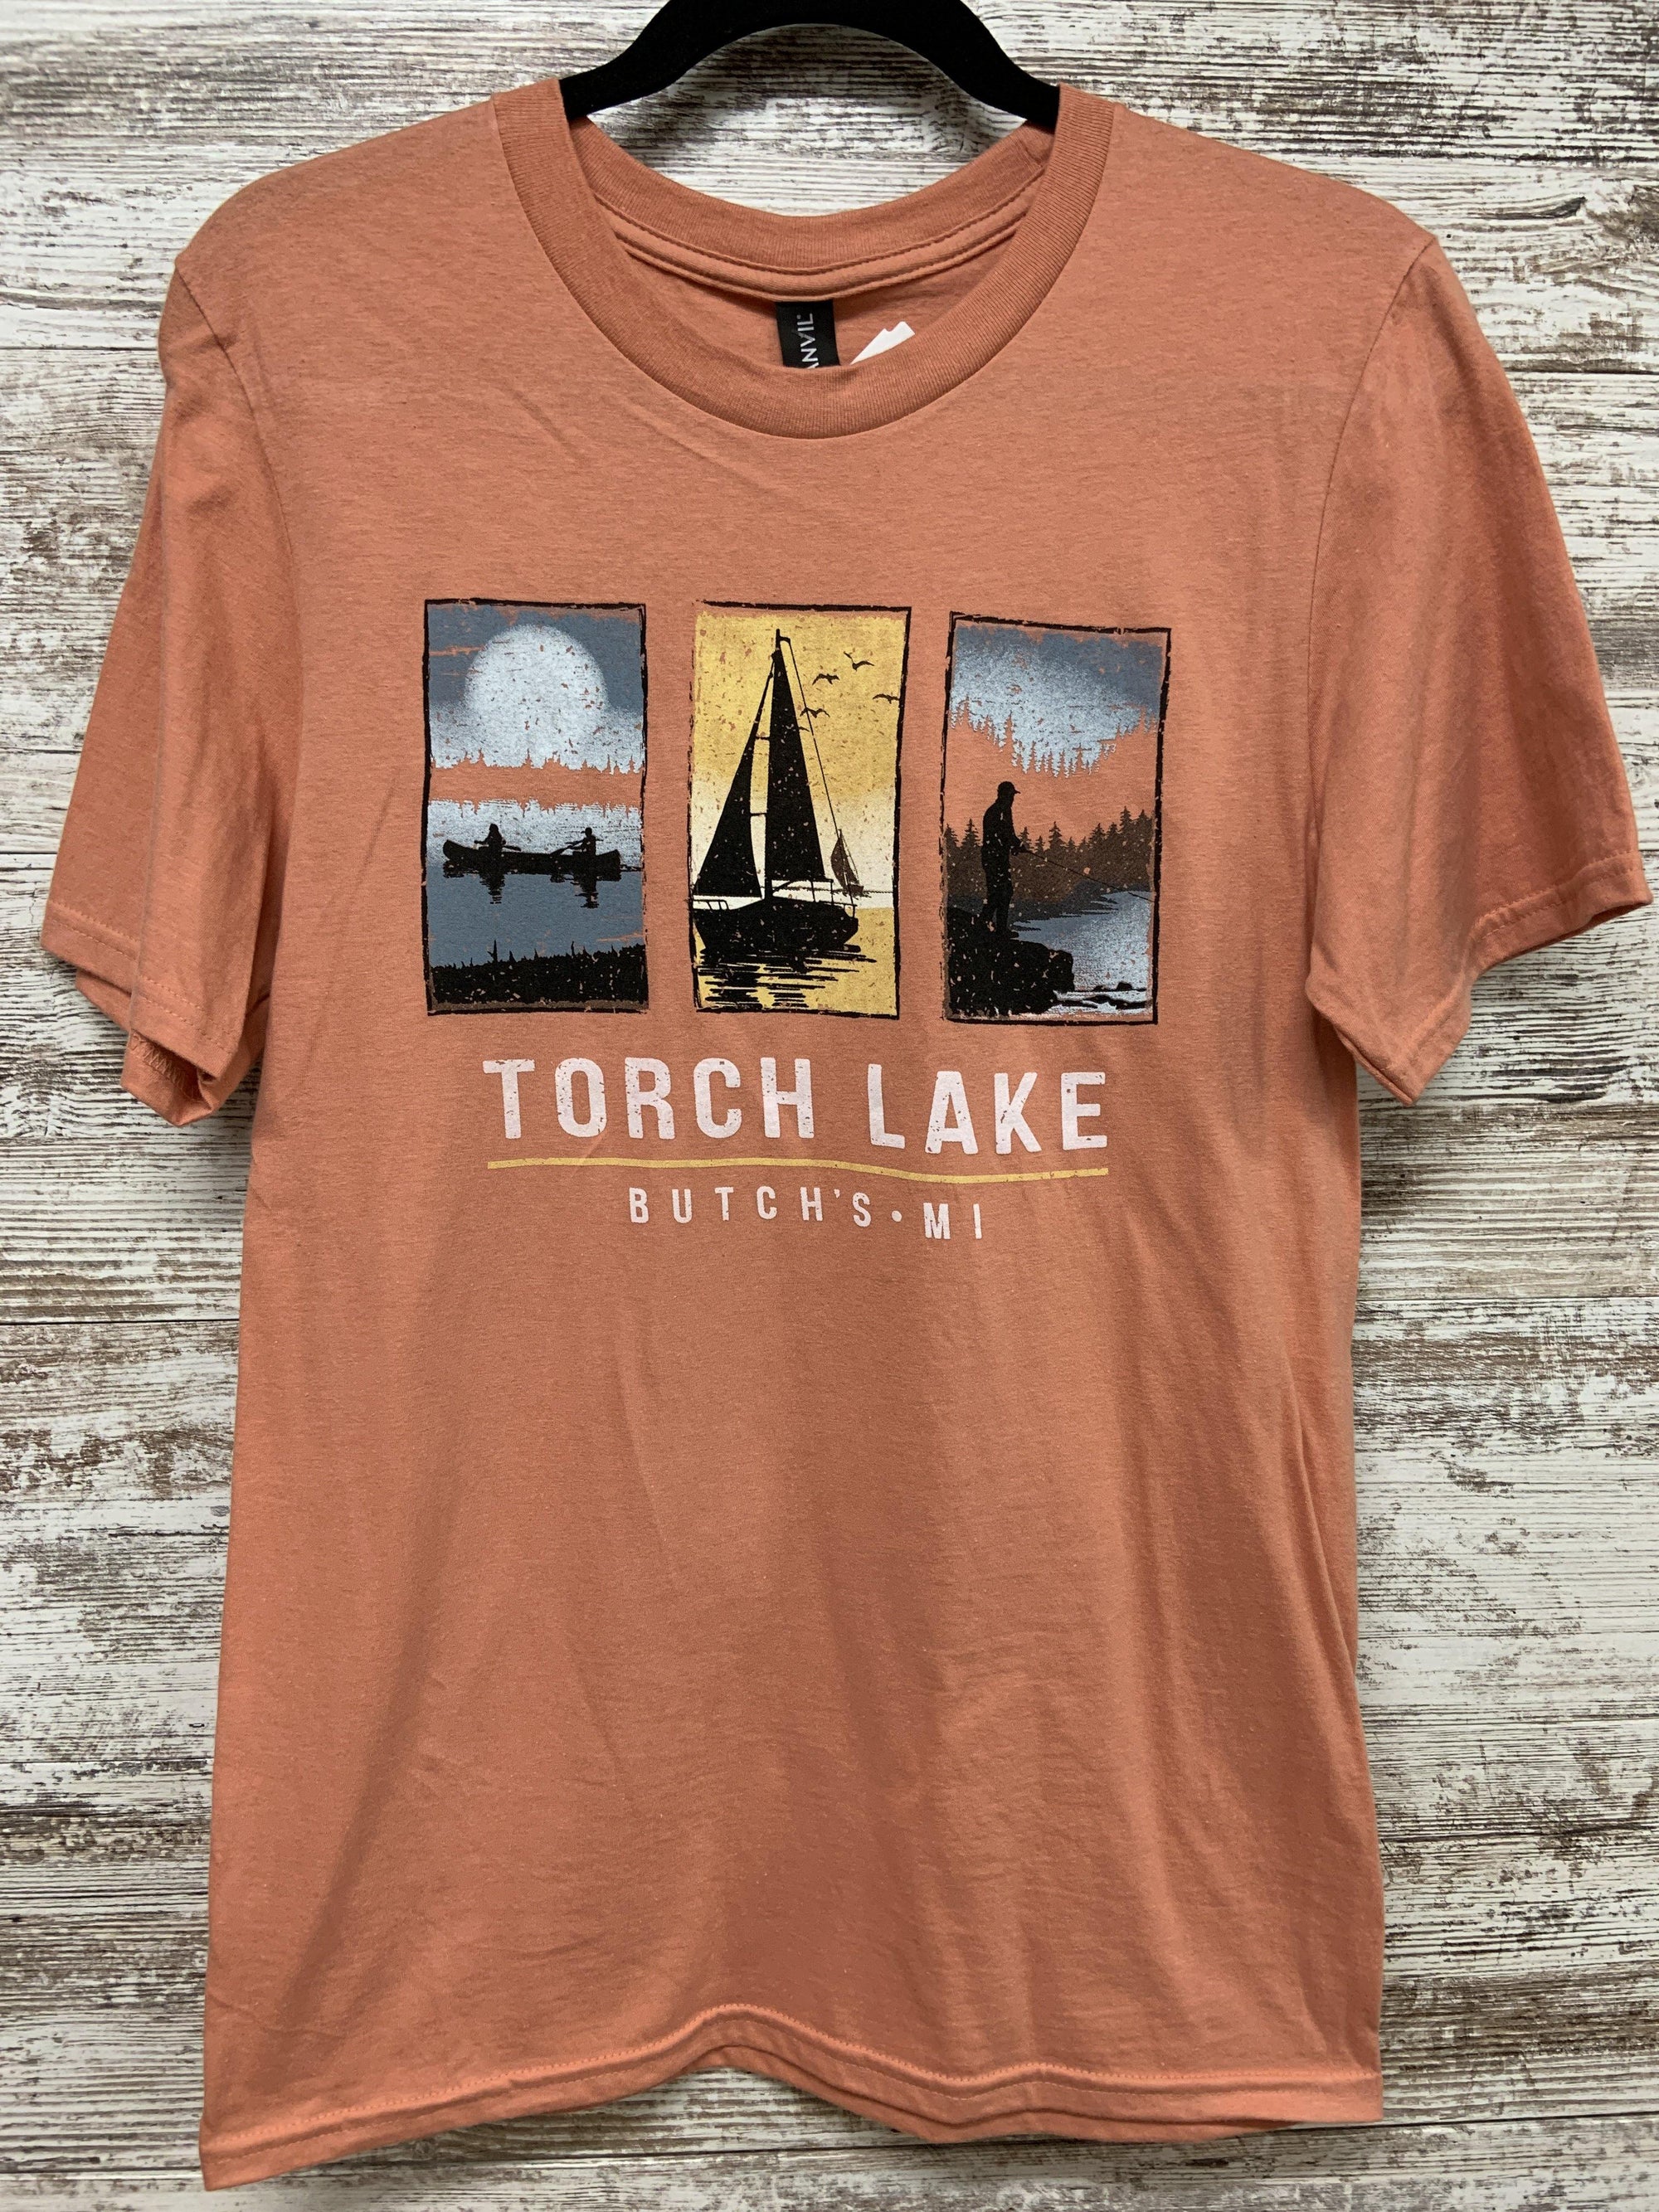 Through the Torch Lake Window Tshirt - Butch's Tackle & Marine - Pontoon Rentals on Torch Lake